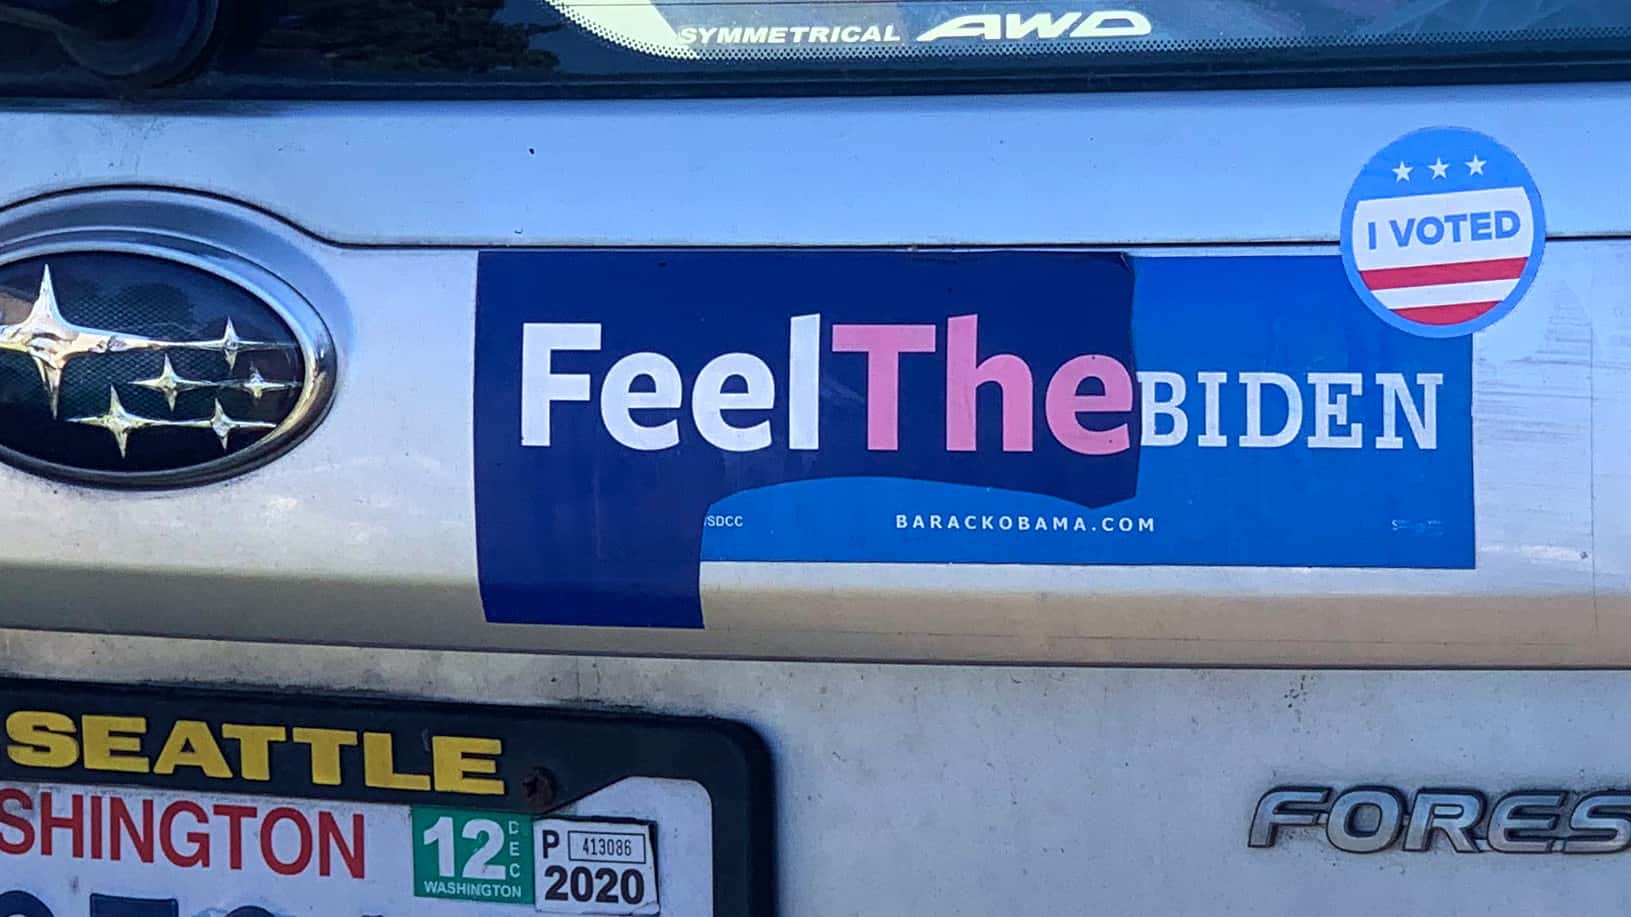 Bernie Sanders 2020 bumper sticker partially torn off to reveal an Obama/Biden 2012 sticker, together reading “Feel The Biden”